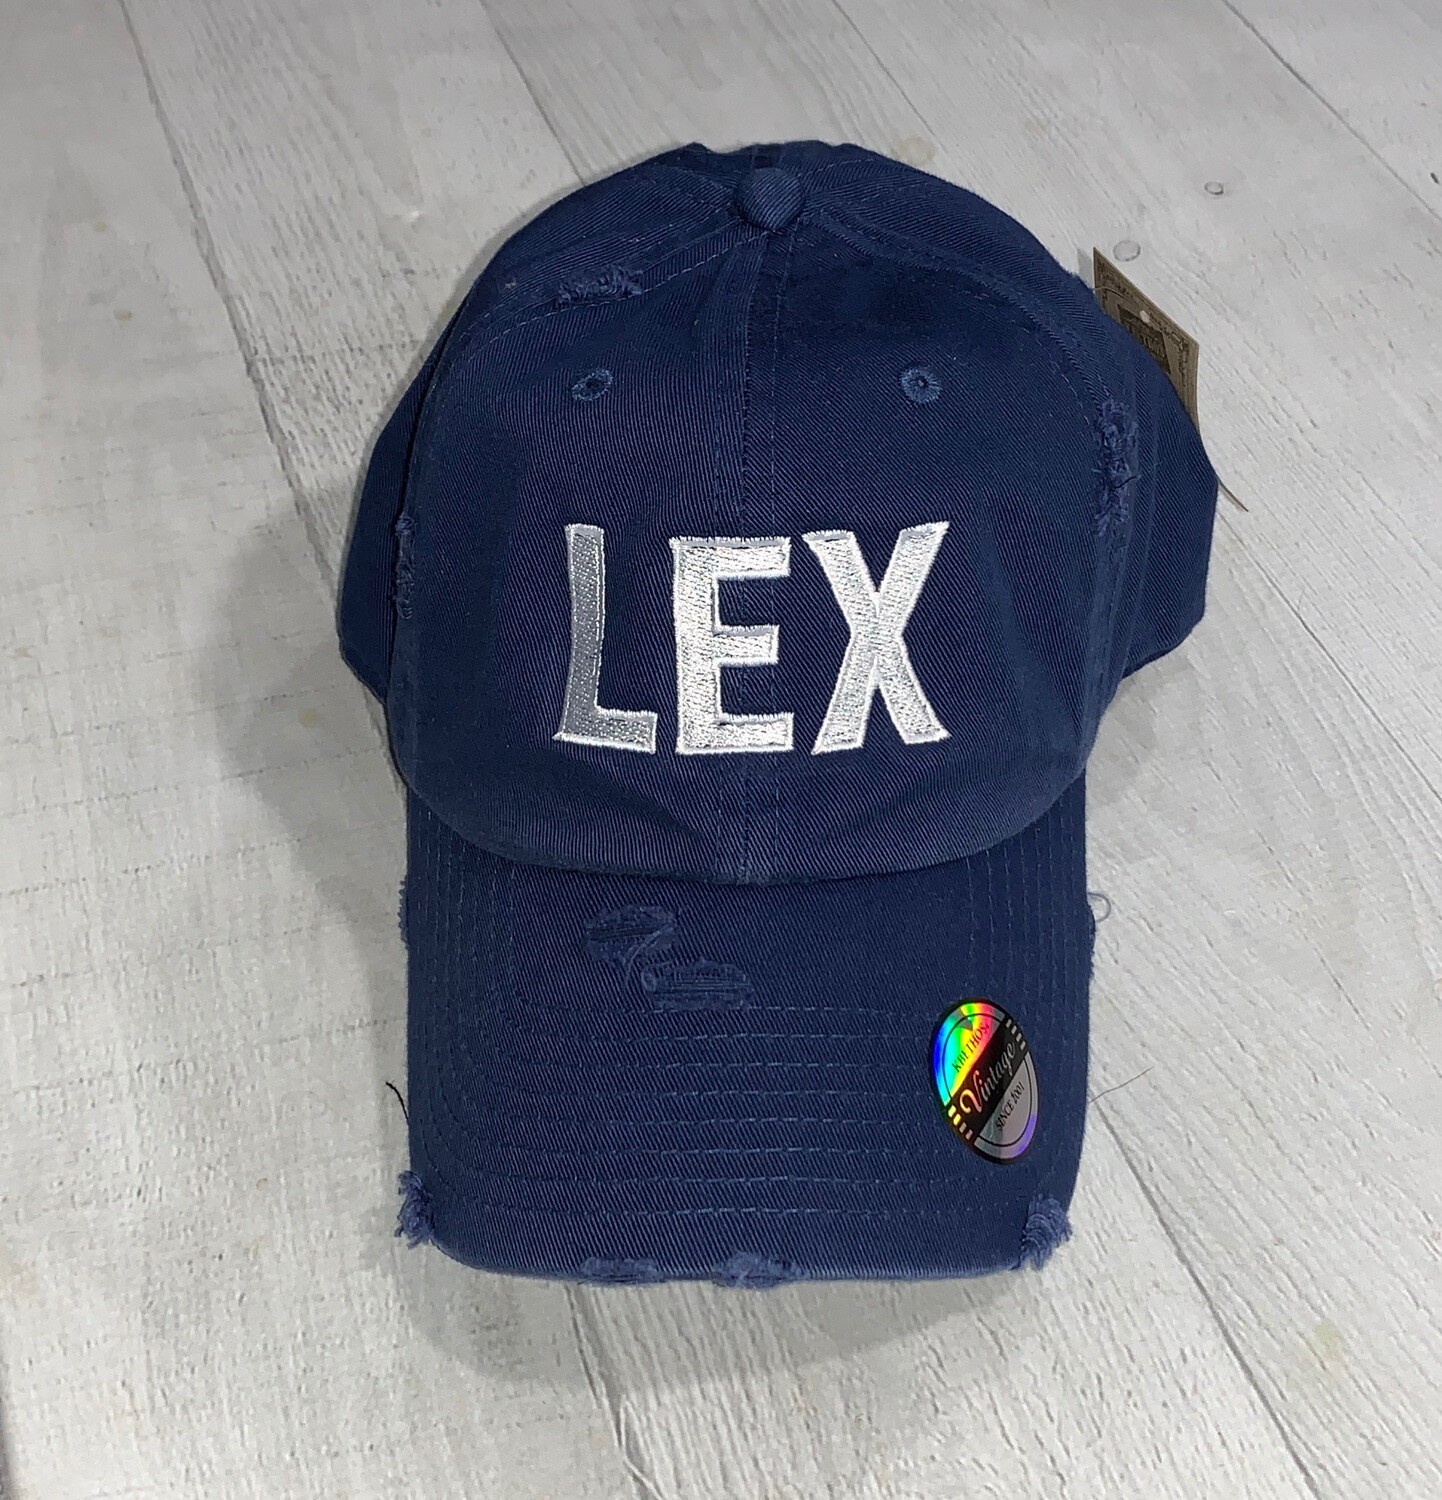 LEX Distressed Navy Ball Cap